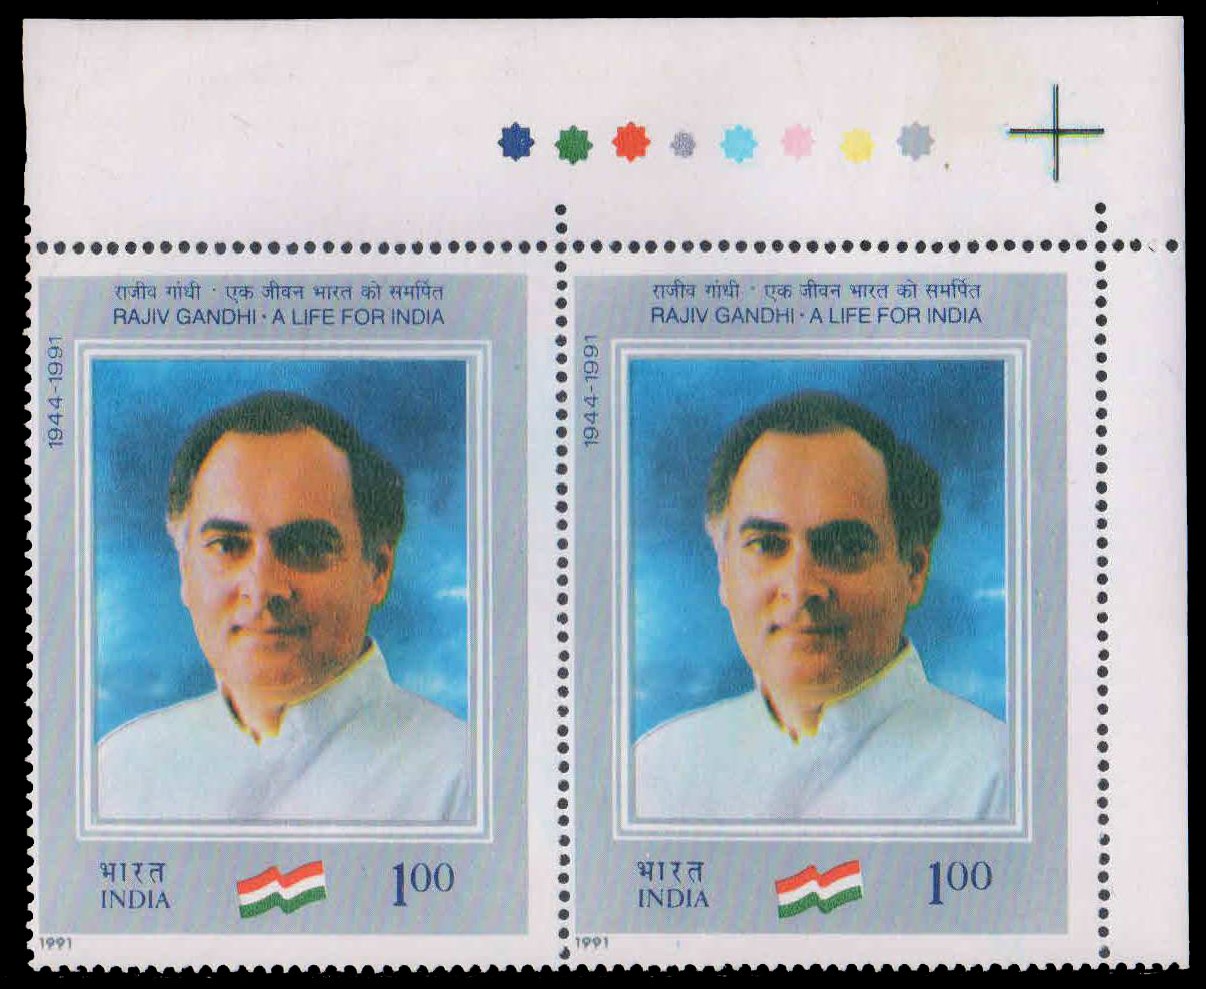 INDIA 1991-Rajiv Gandhi (Former Prime Minister), Traffic Light Pair, 2nd Position, MNH, S.G. 1463